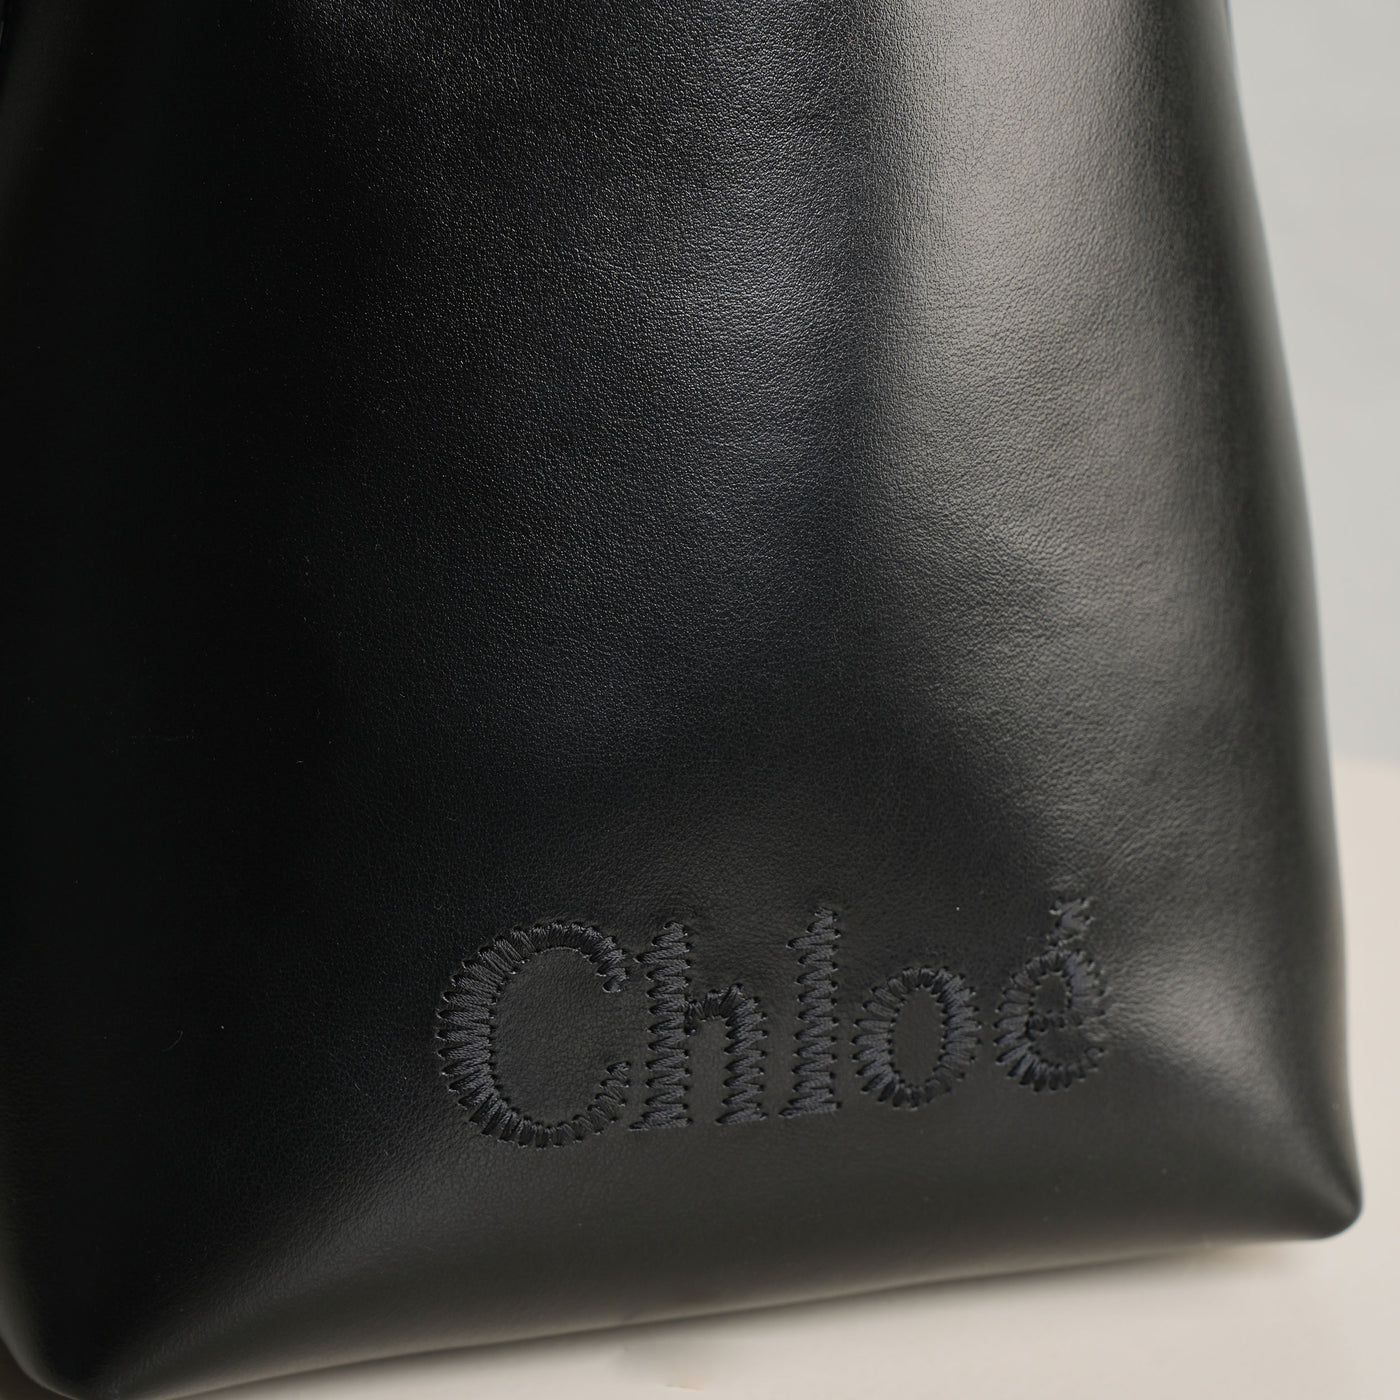 CHLOÉ embroidered logo bag